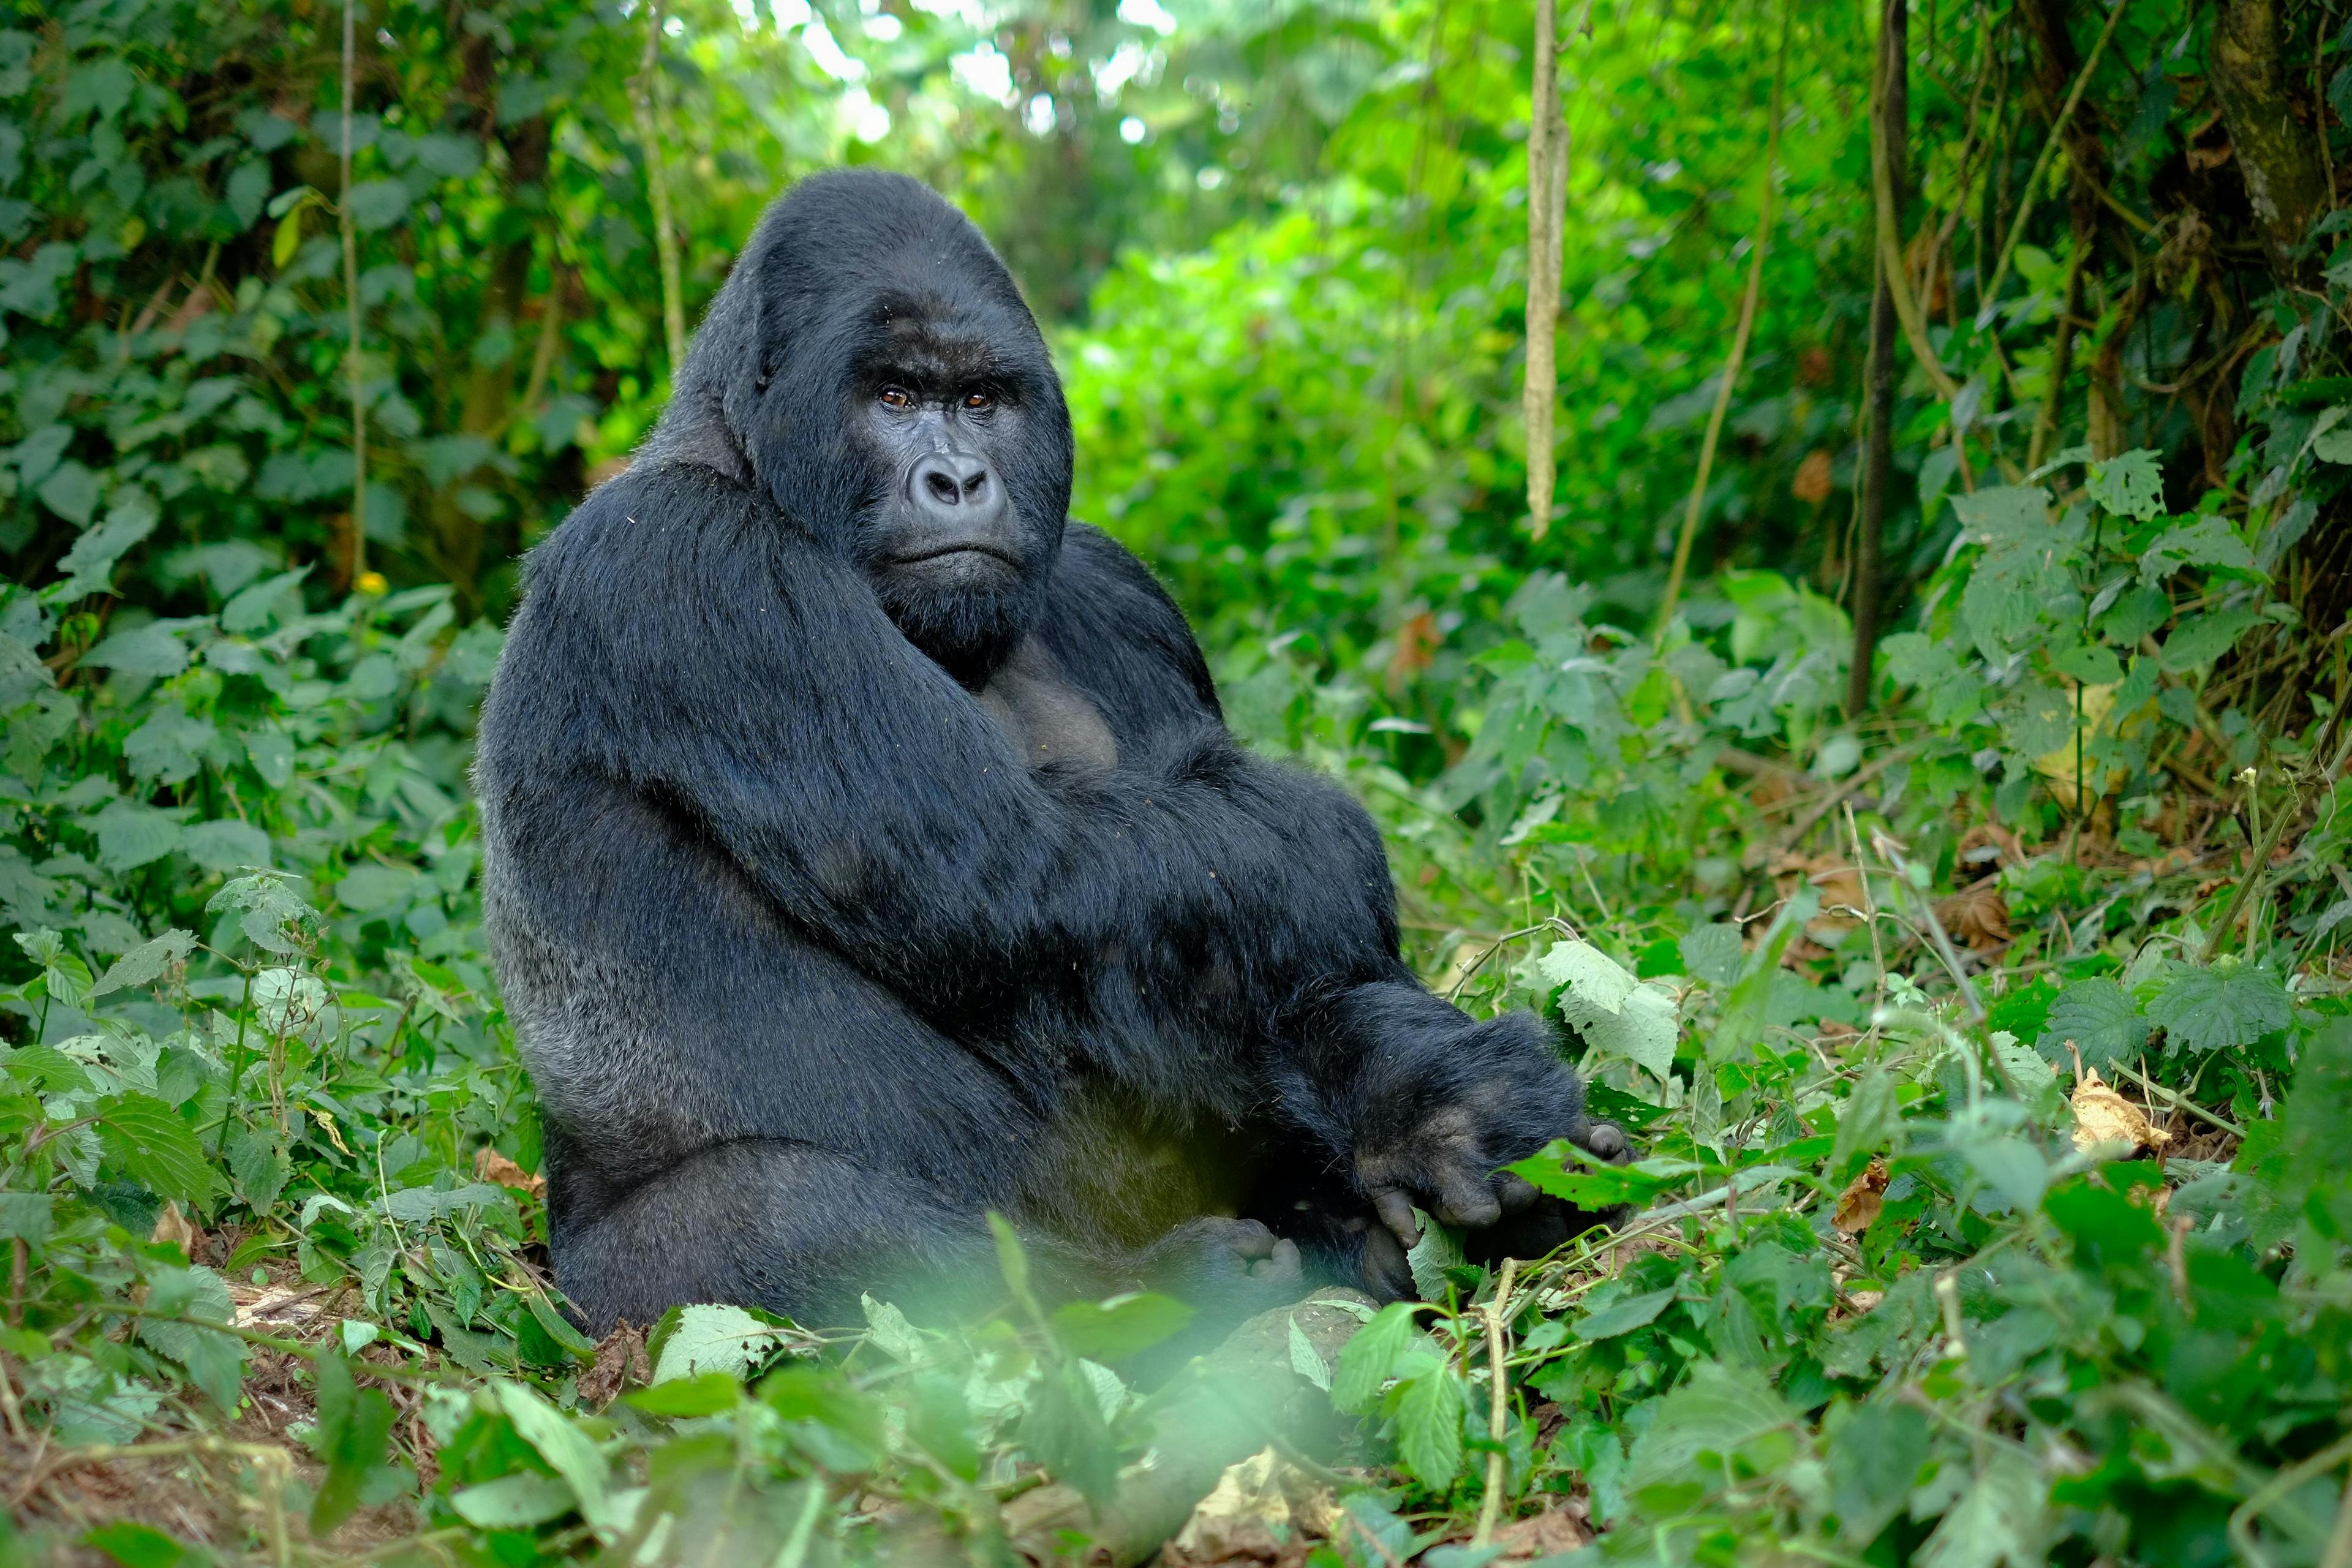 Sustaining the captive gorilla population, one ForageFeeder at a time